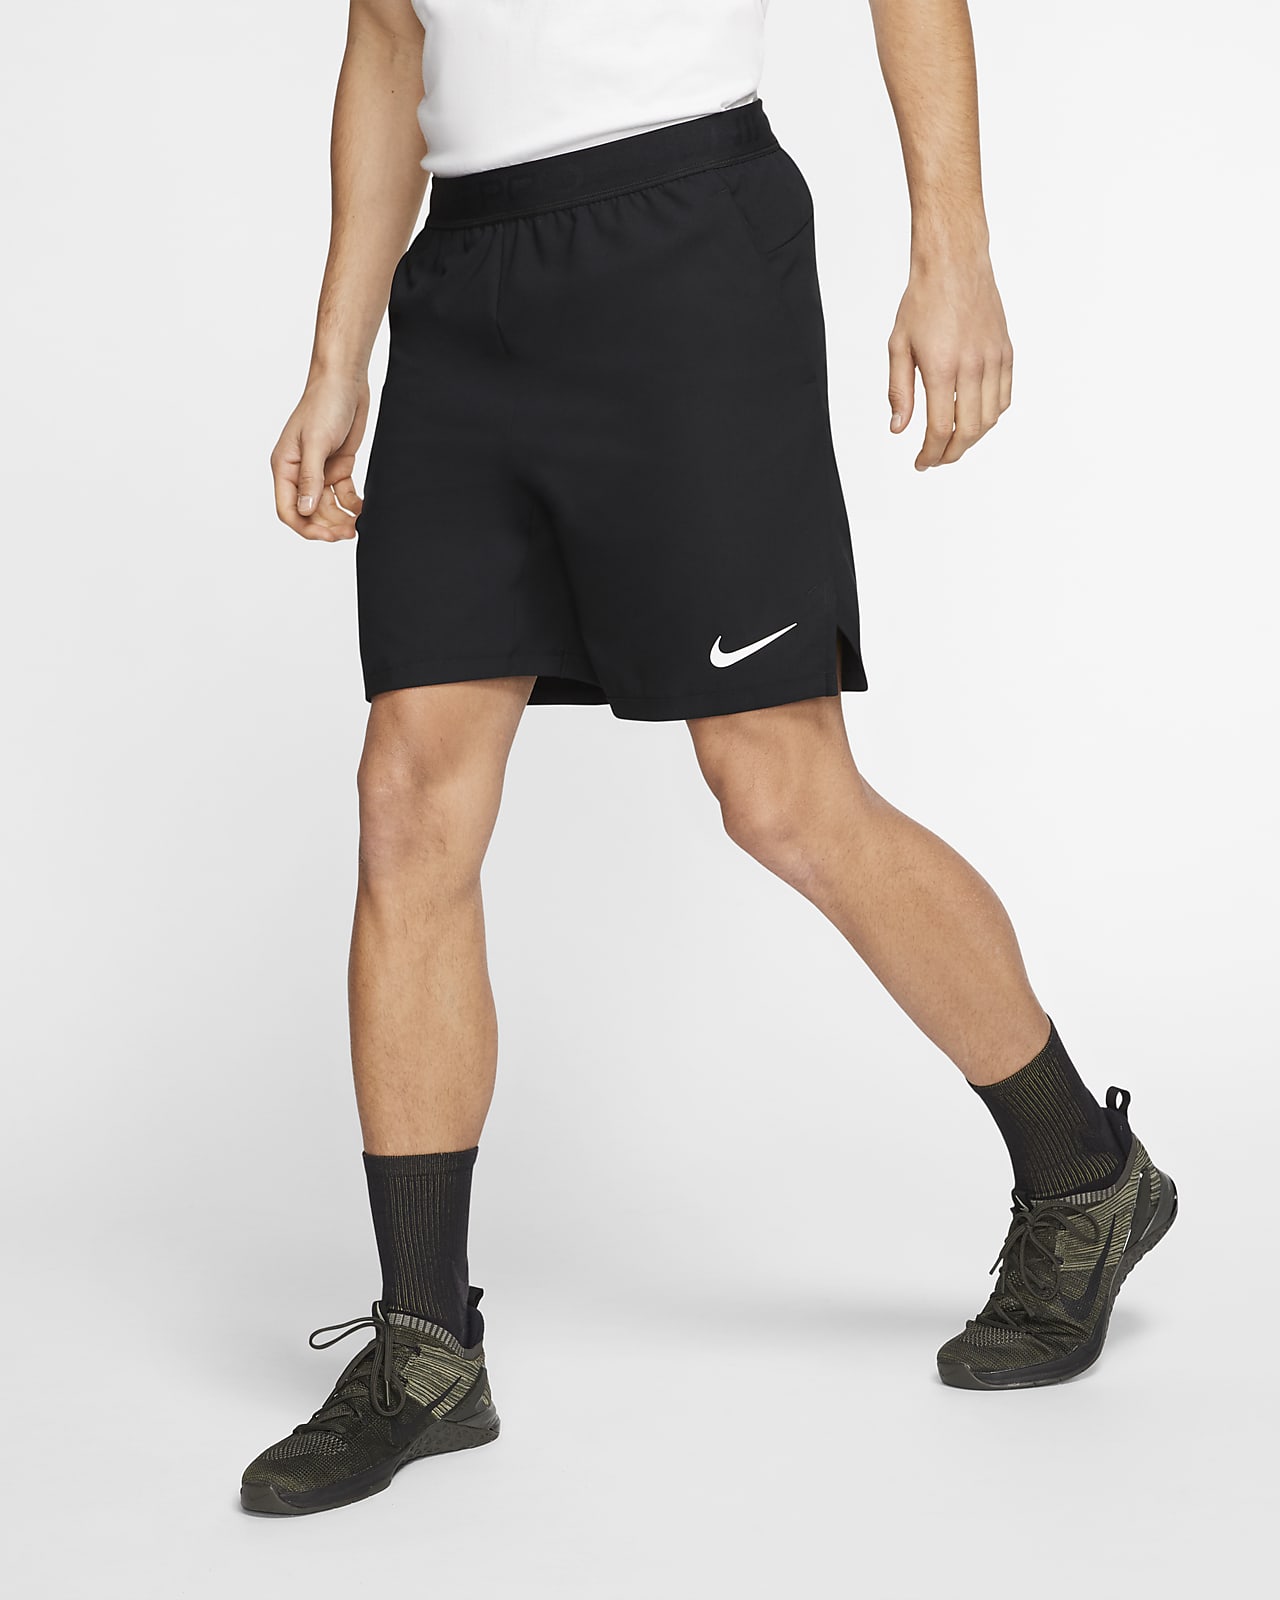 Nike公式 ナイキ プロ フレックス メンズショートパンツ オンラインストア 通販サイト